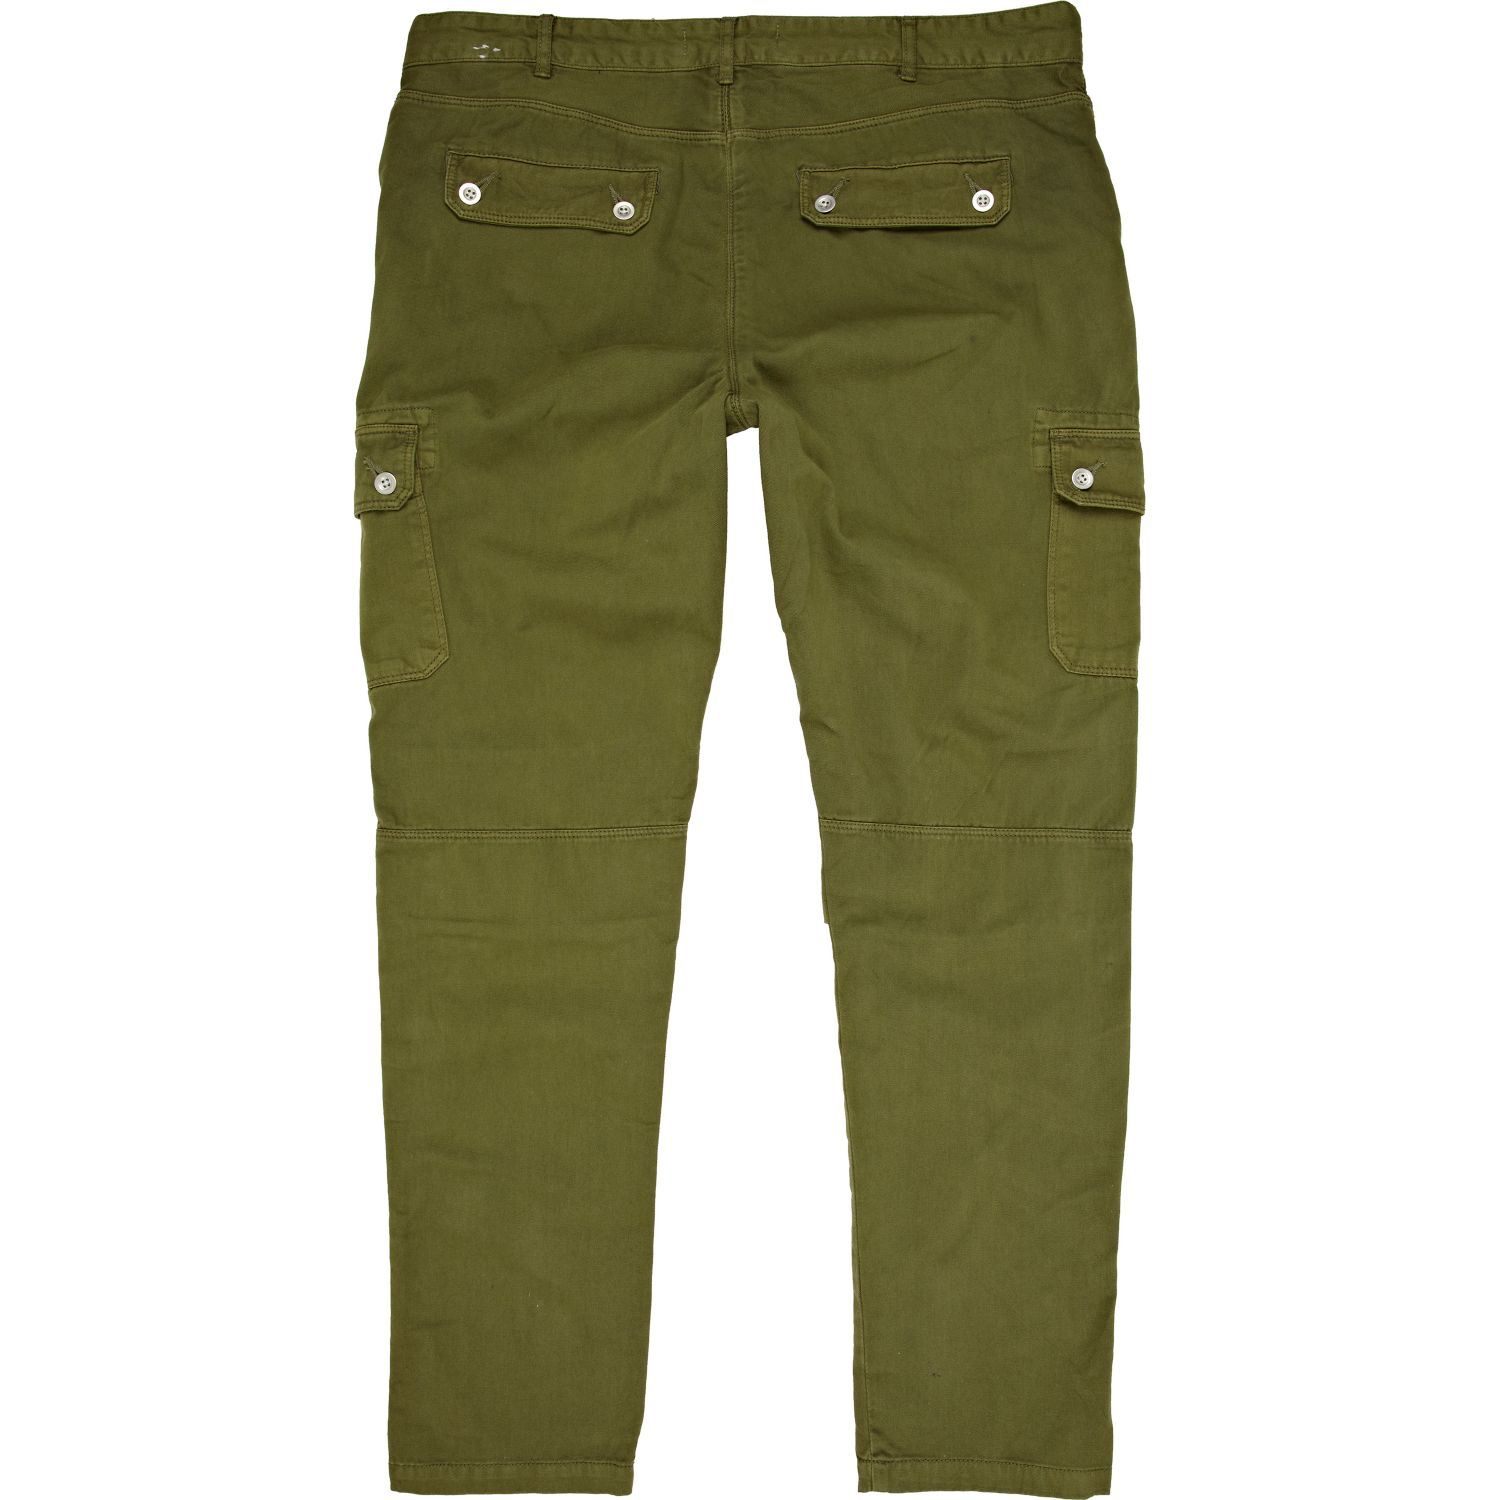 River Island Green Cargo Pants for Men - Lyst